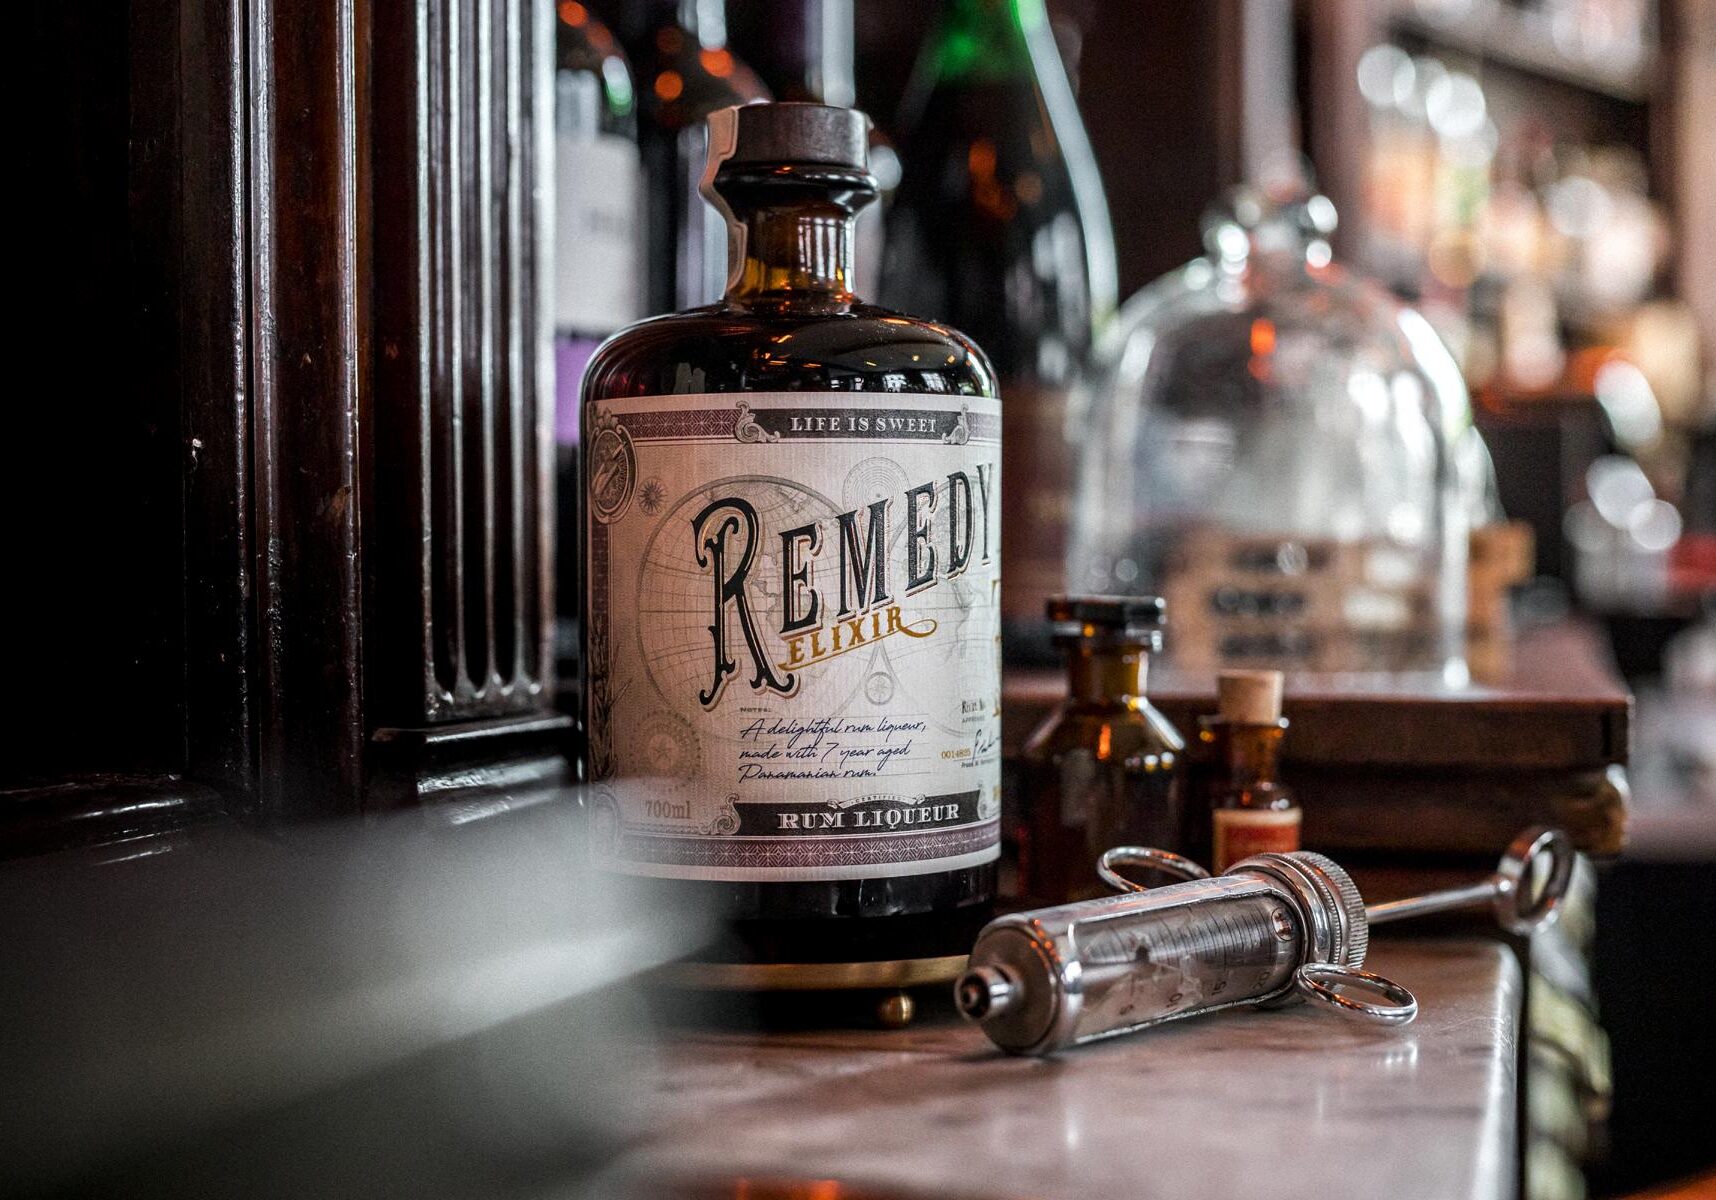 Remedy-Rum